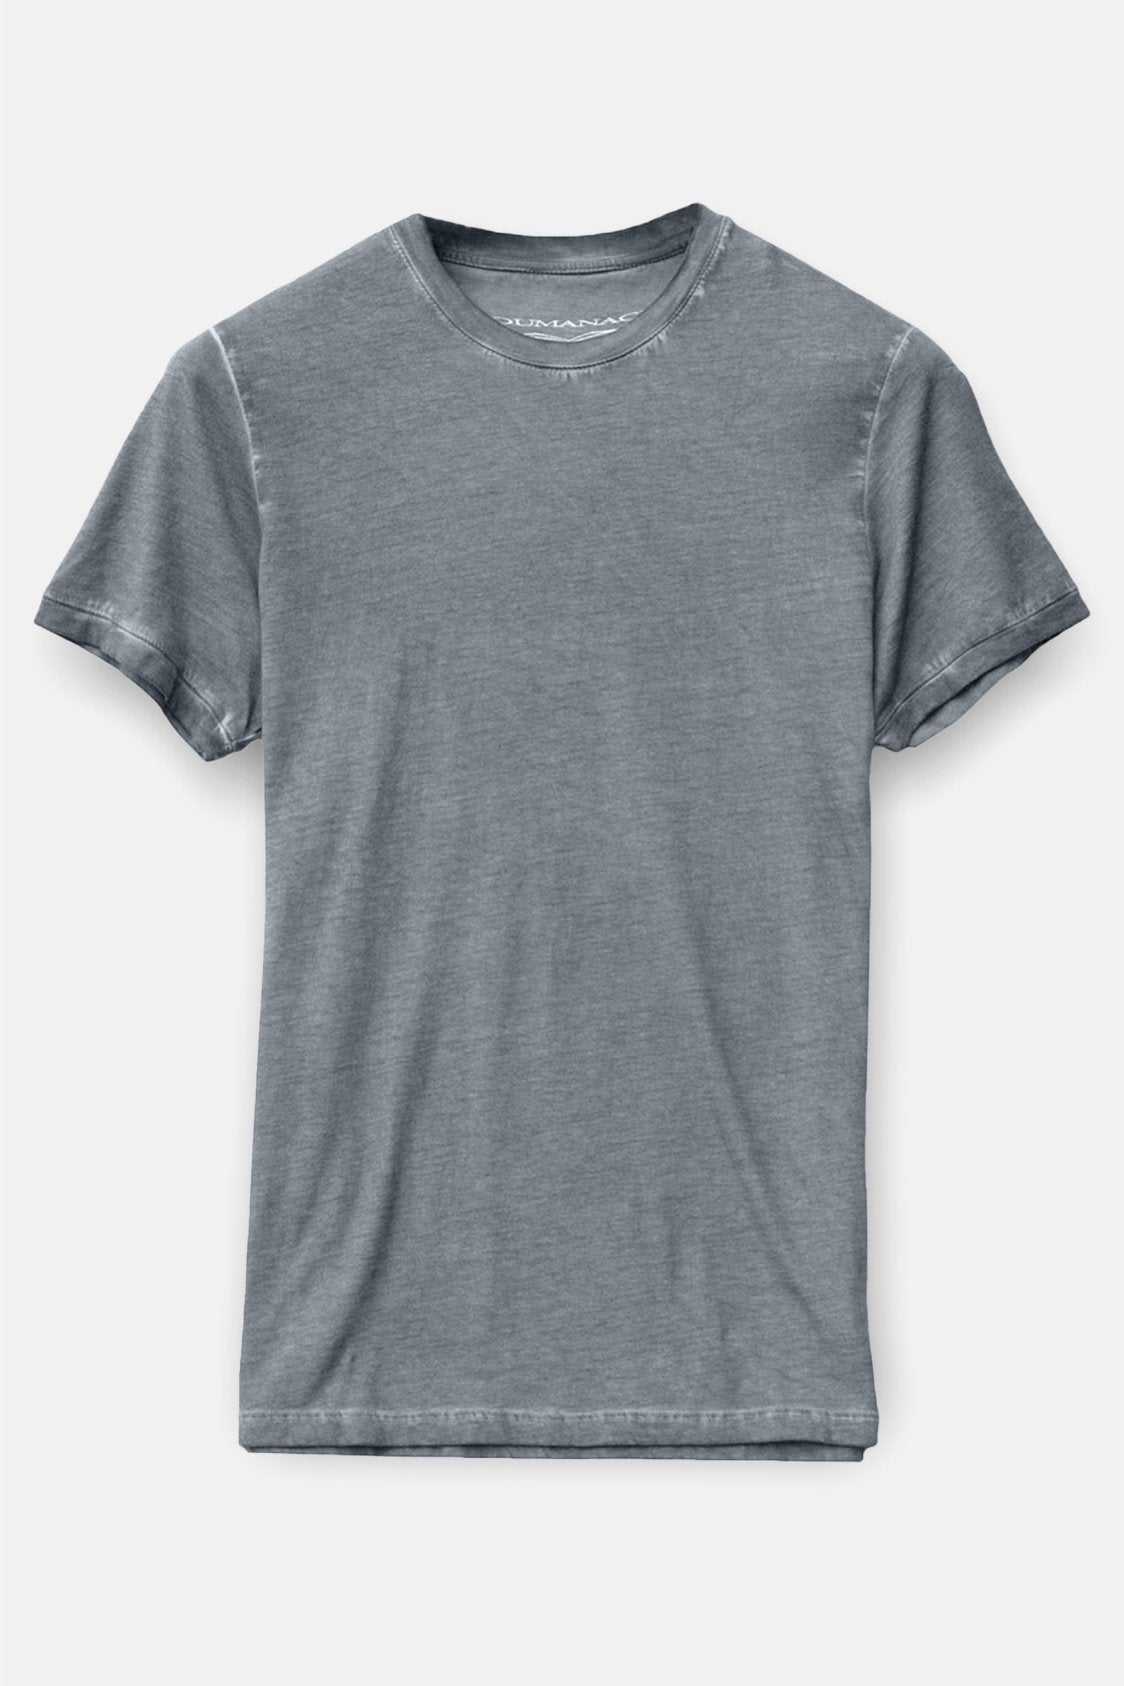 iron-grey cotton t-shirt